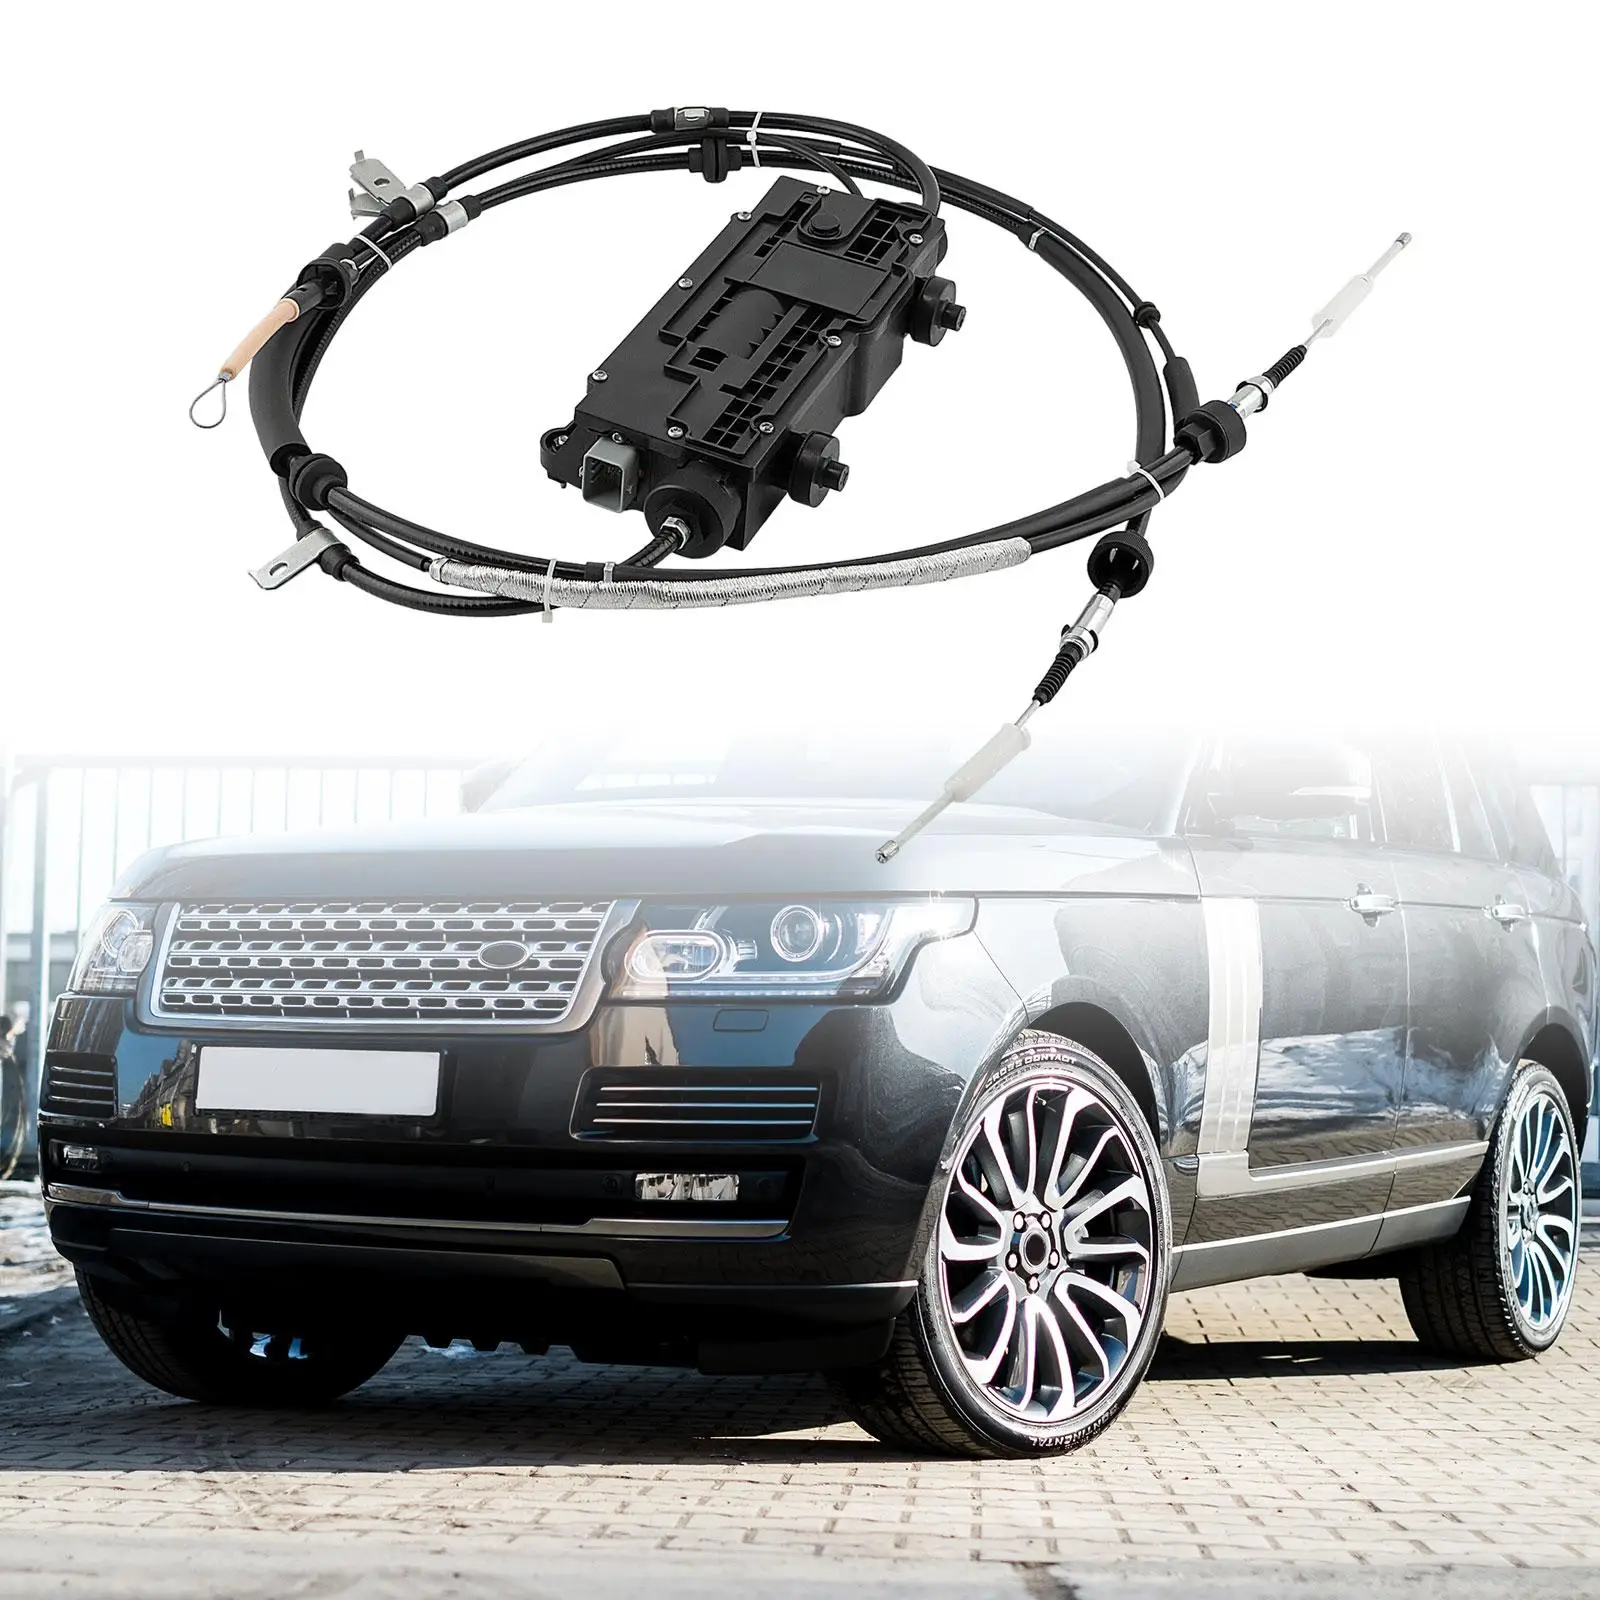 Parking Brake Cable LR019223 Professional for land rover lr3